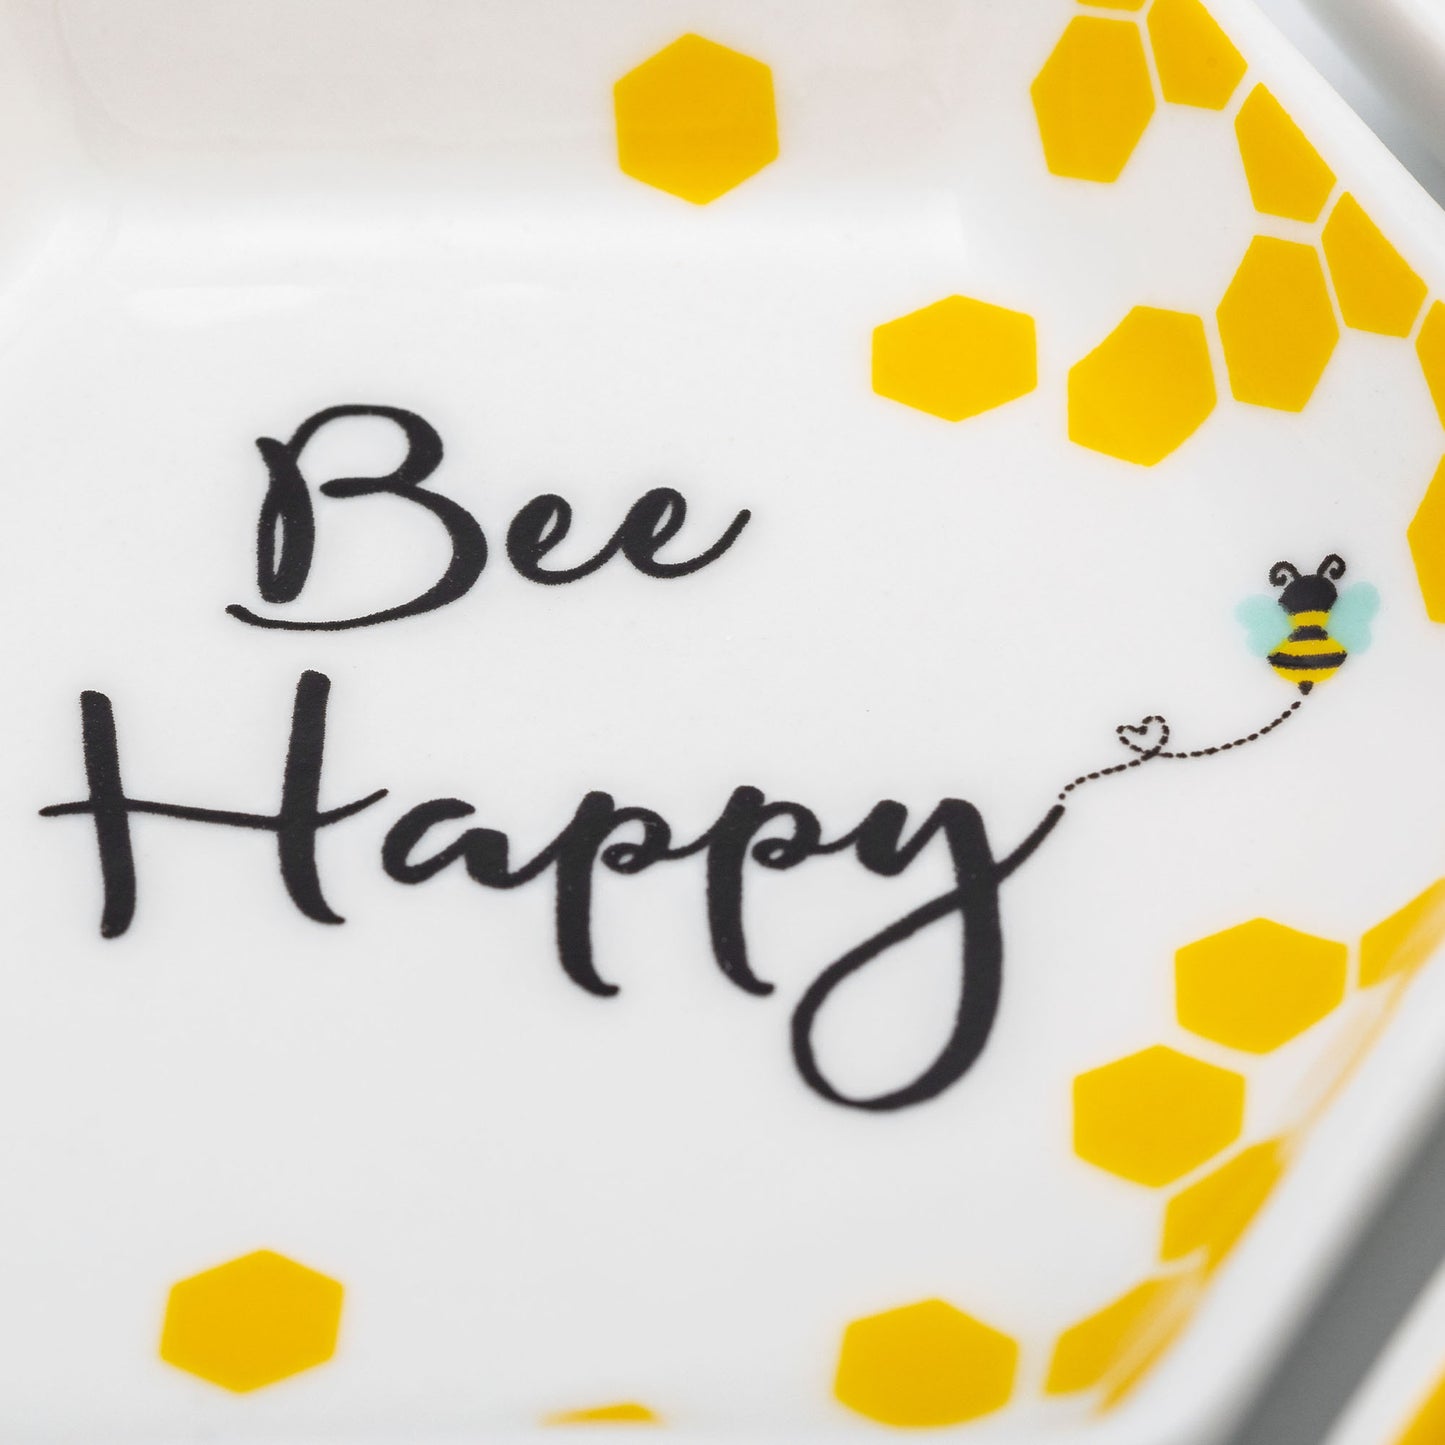 Bee Happy Trinket Dish - Set of 3